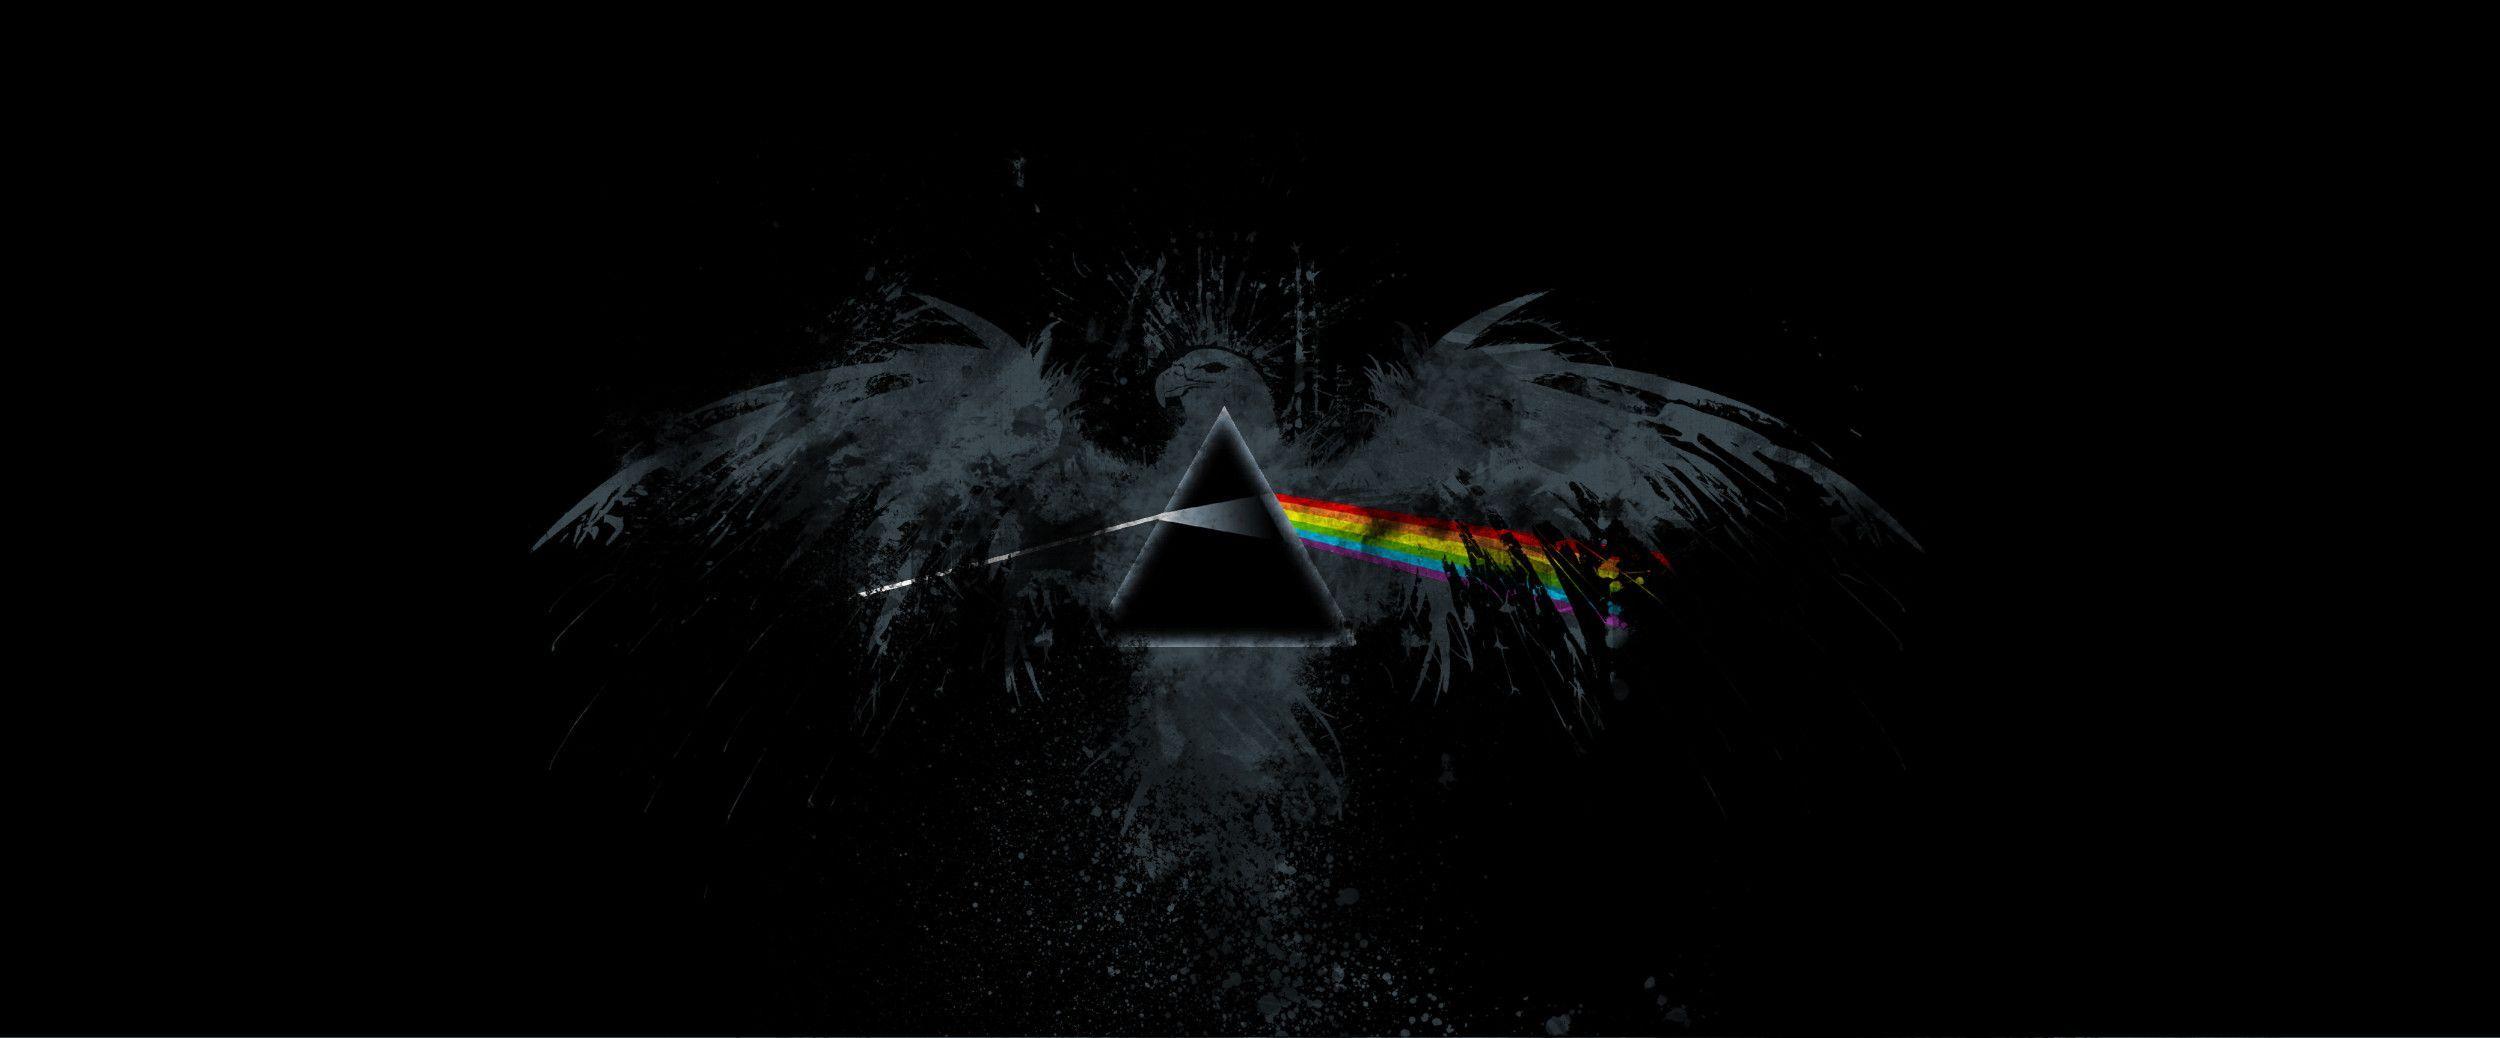 Pink Floyd HD Wallpaper